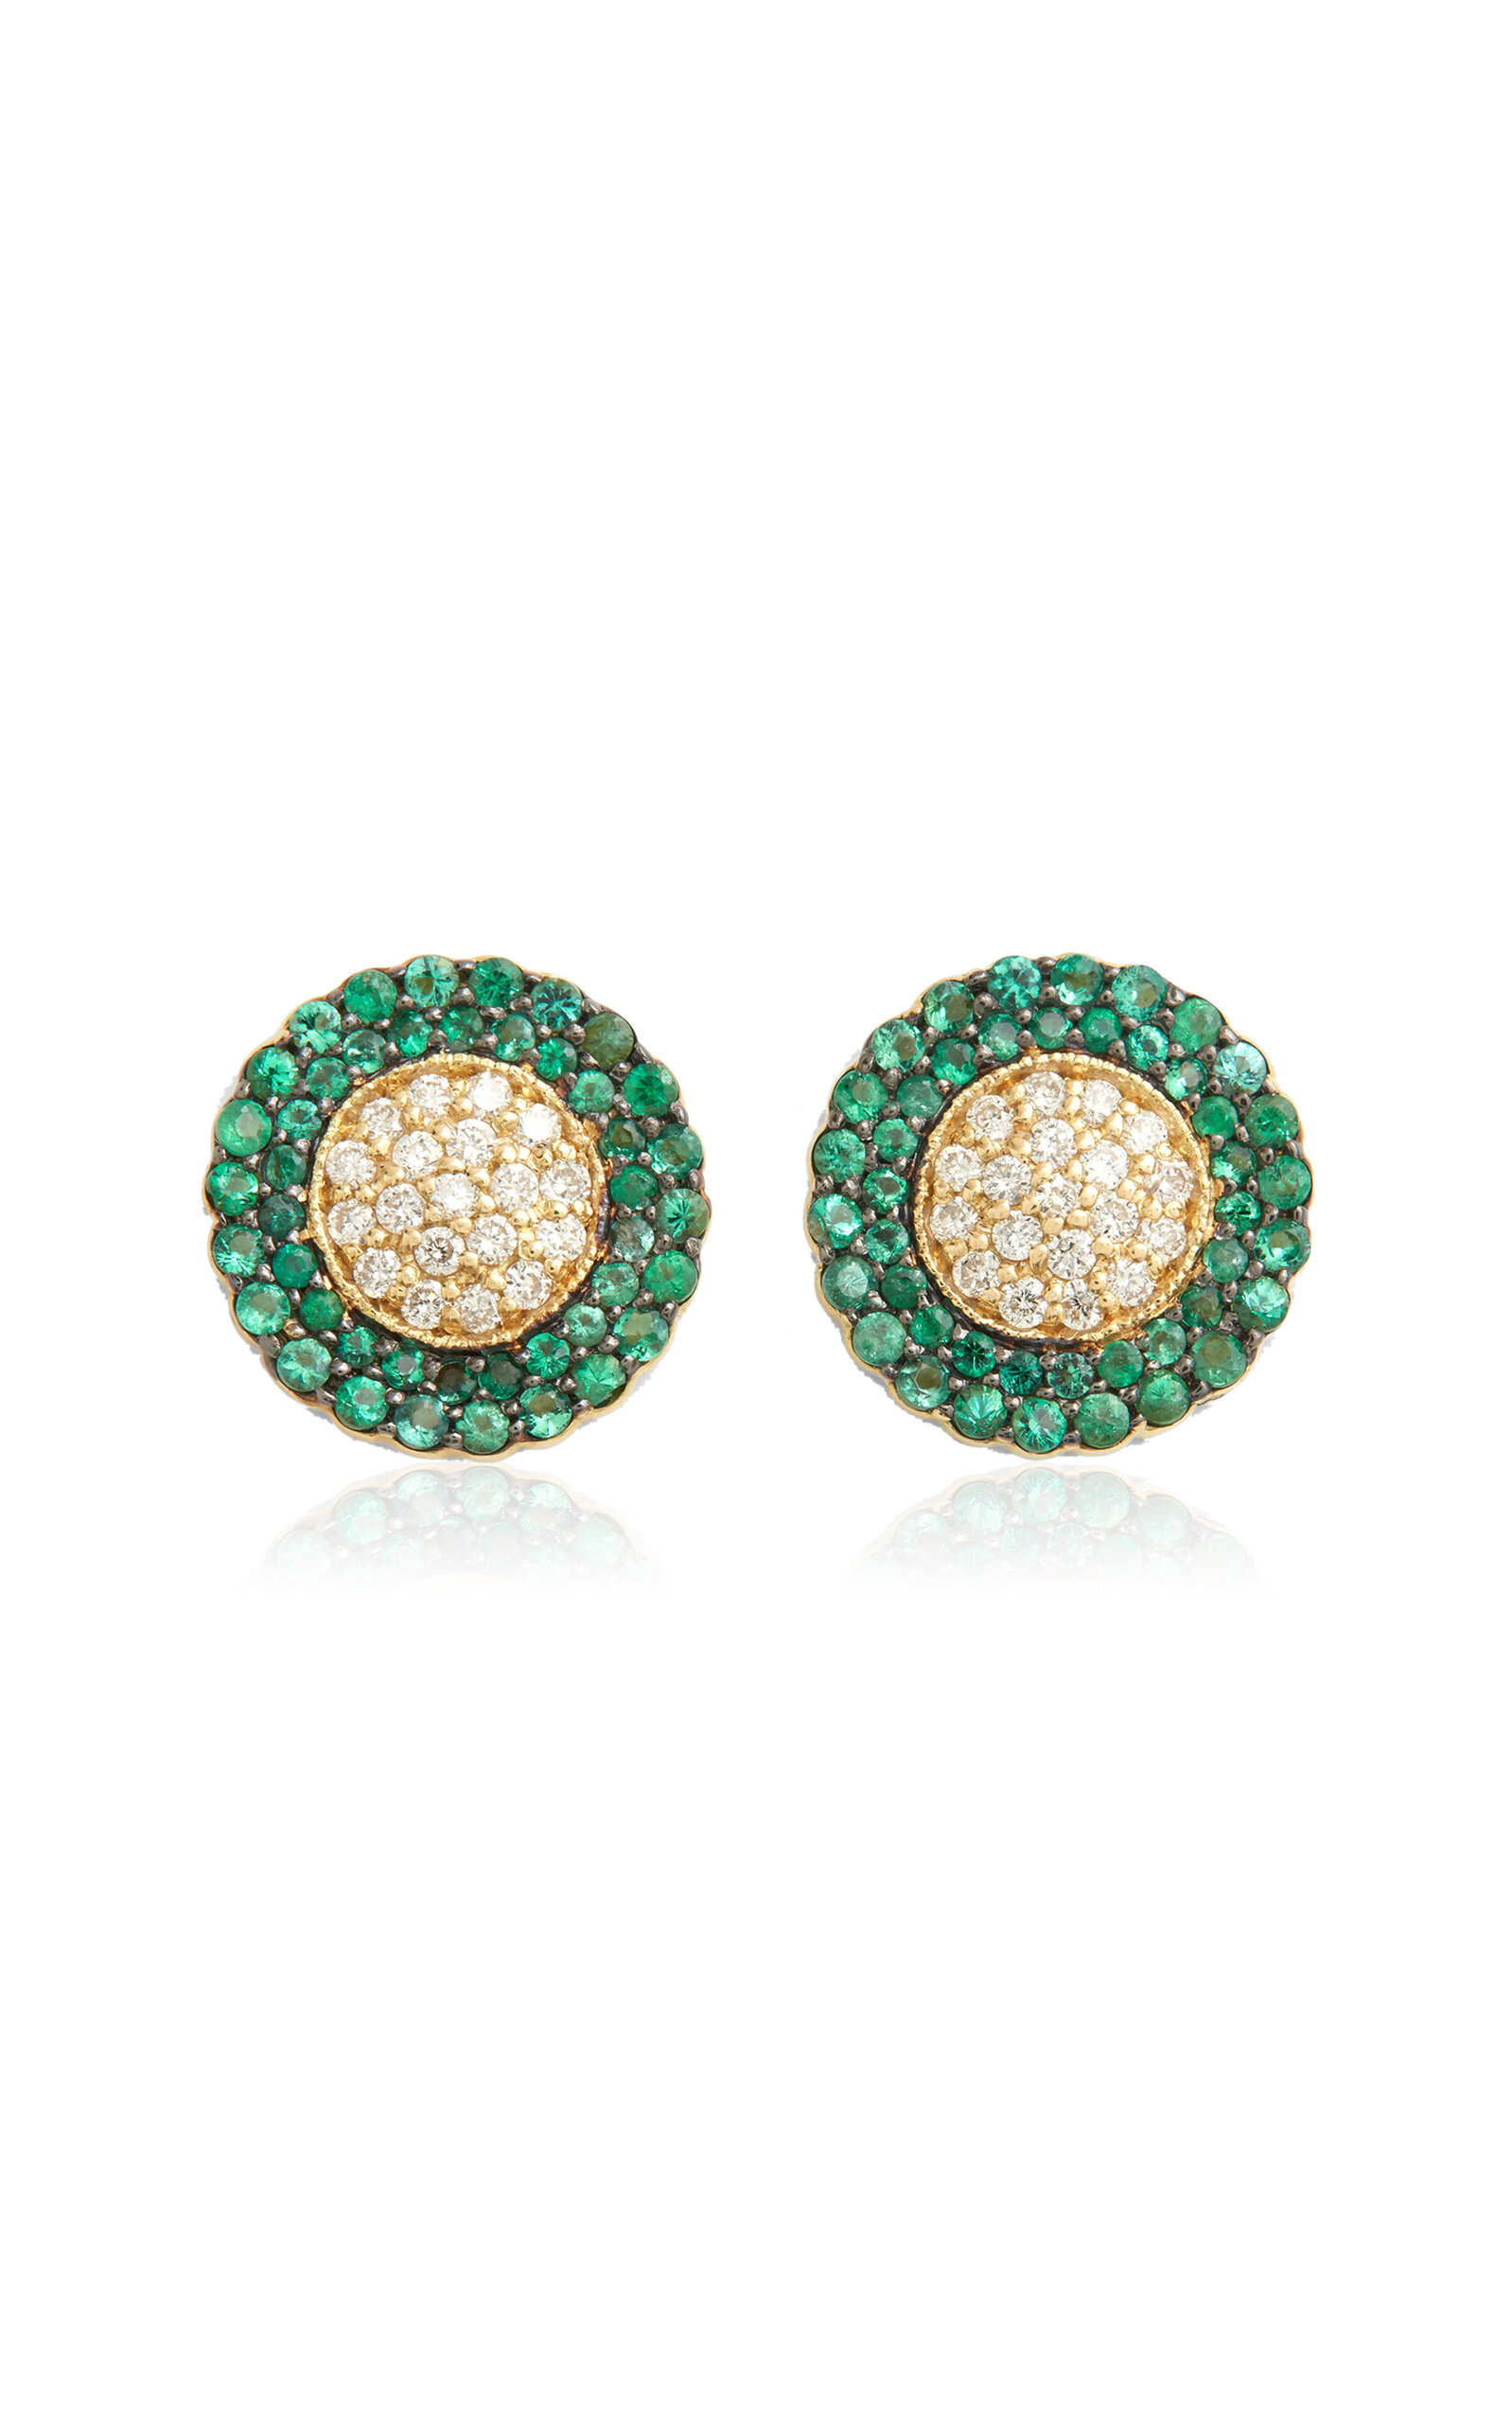 18k Yellow Gold Diamond and Emerald Earrings